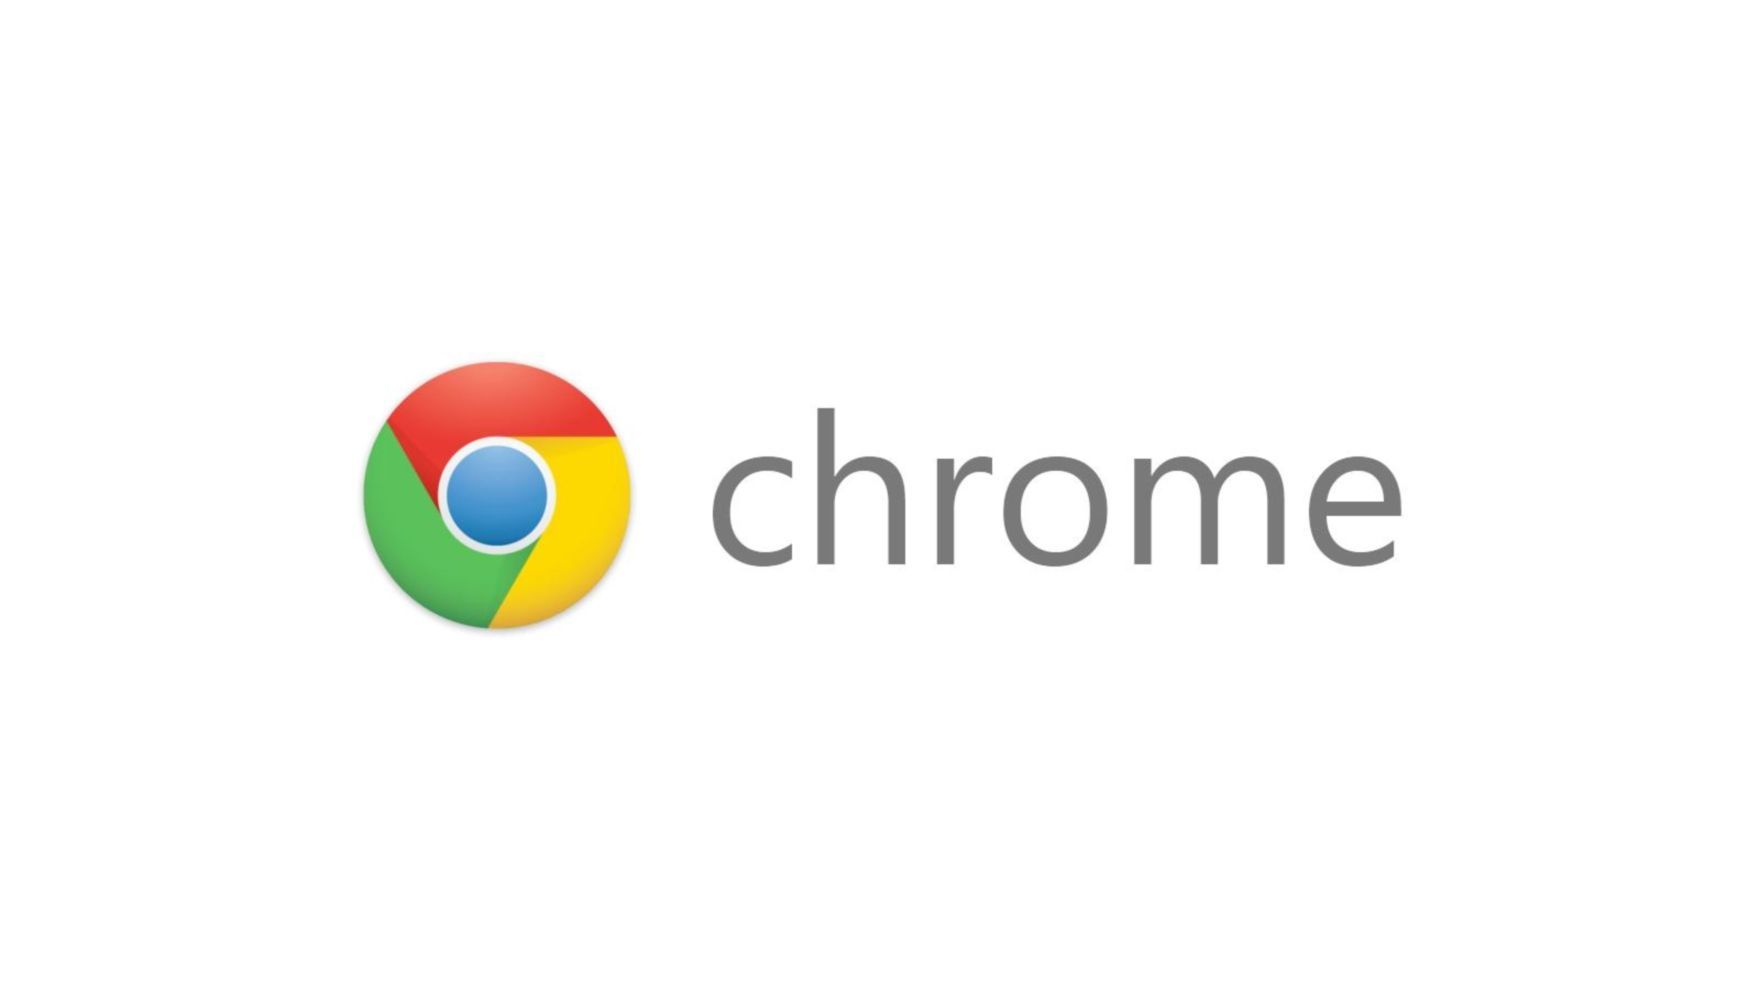 Google Chrome Logo 1920x1080 Wallpaper: Desktop HD Wallpaper Free Image, Picture, Photo on DailyHDWallpaper.com